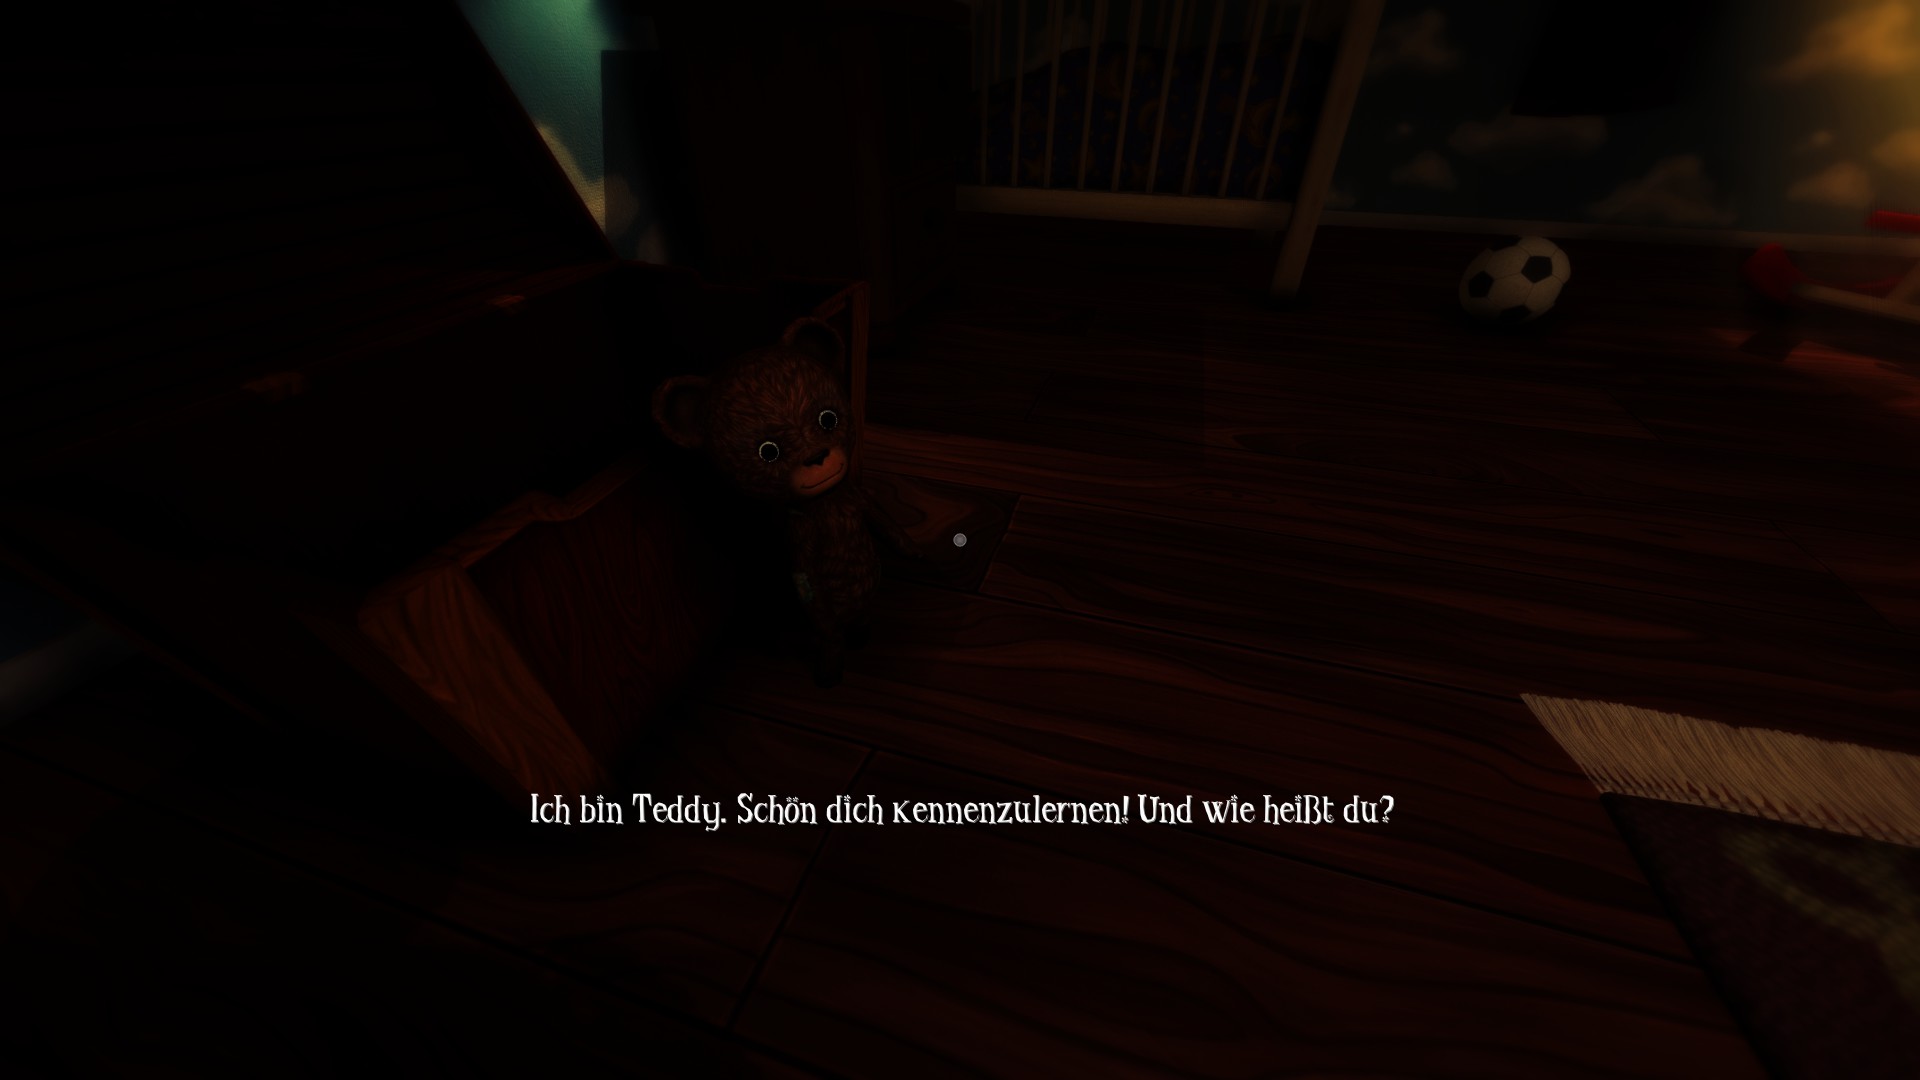 Among the Sleep - Ich bin Teddy